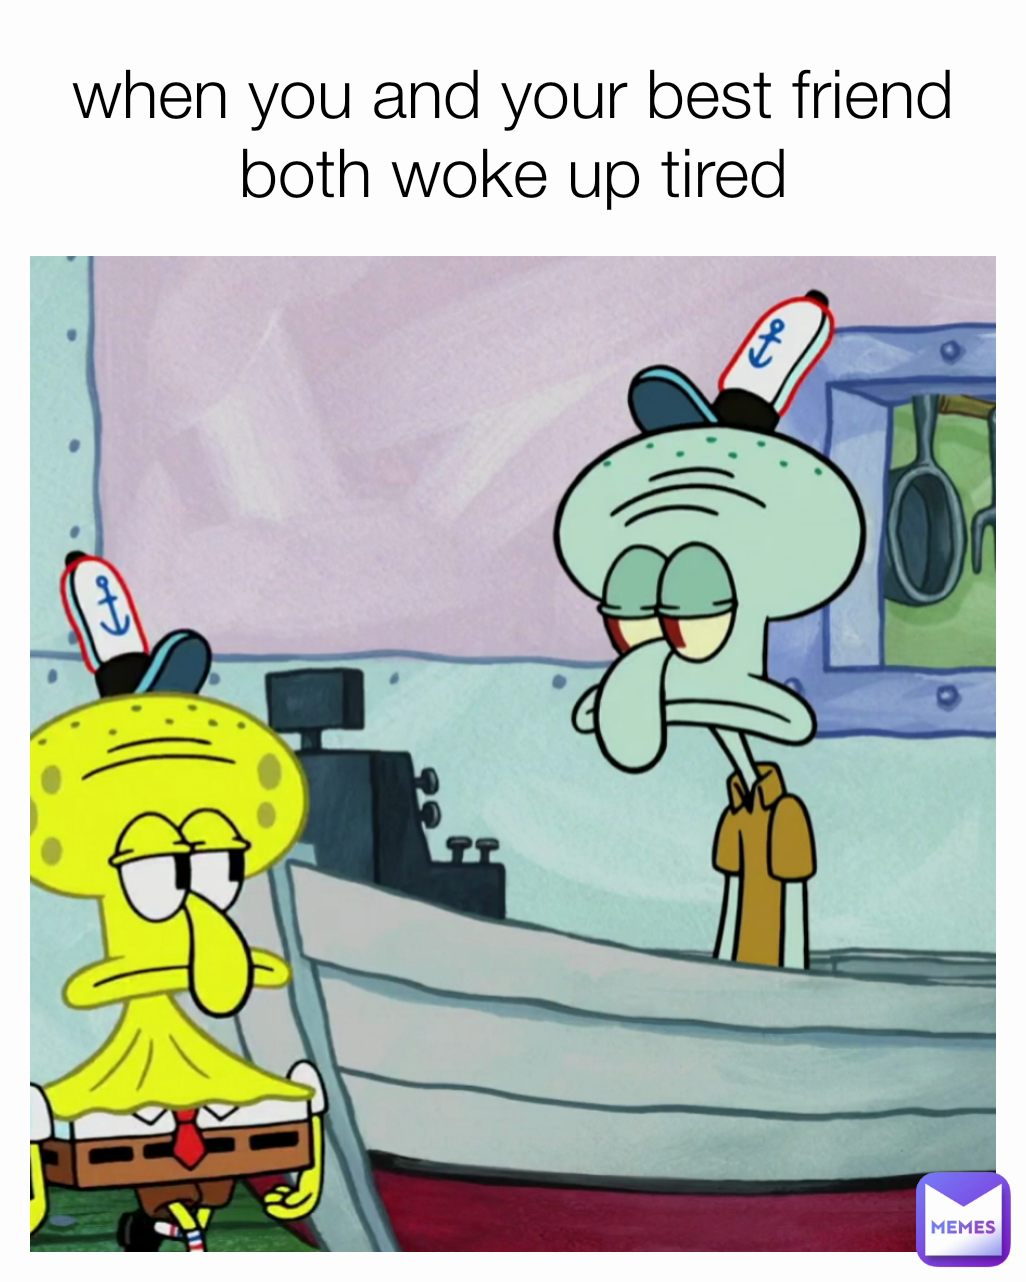 waking up tired meme